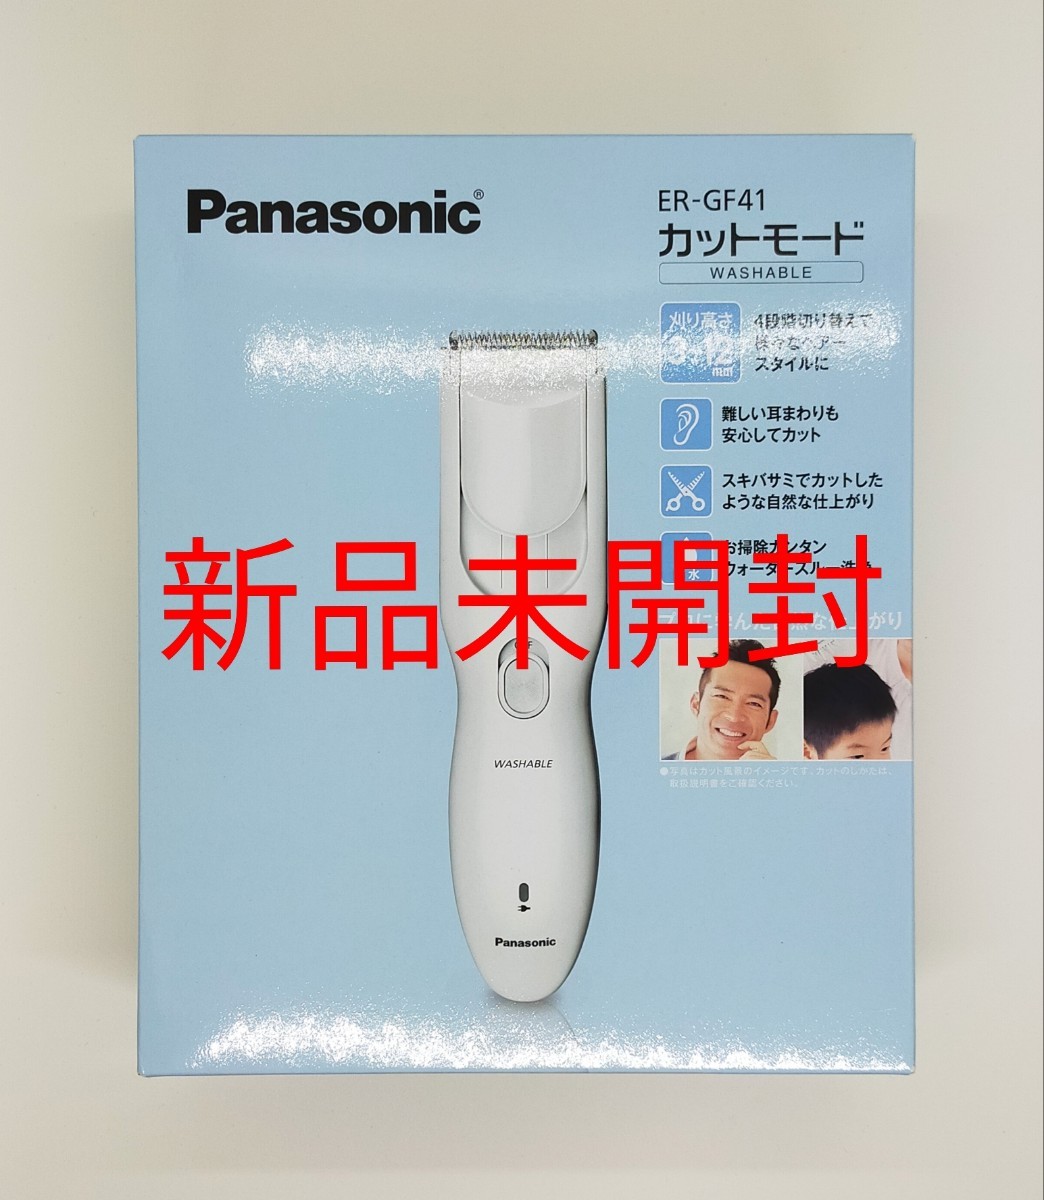 Panasonic パナソニック ER-GF41-W ヘアカッター カットモード ホワイト【新品未開封】